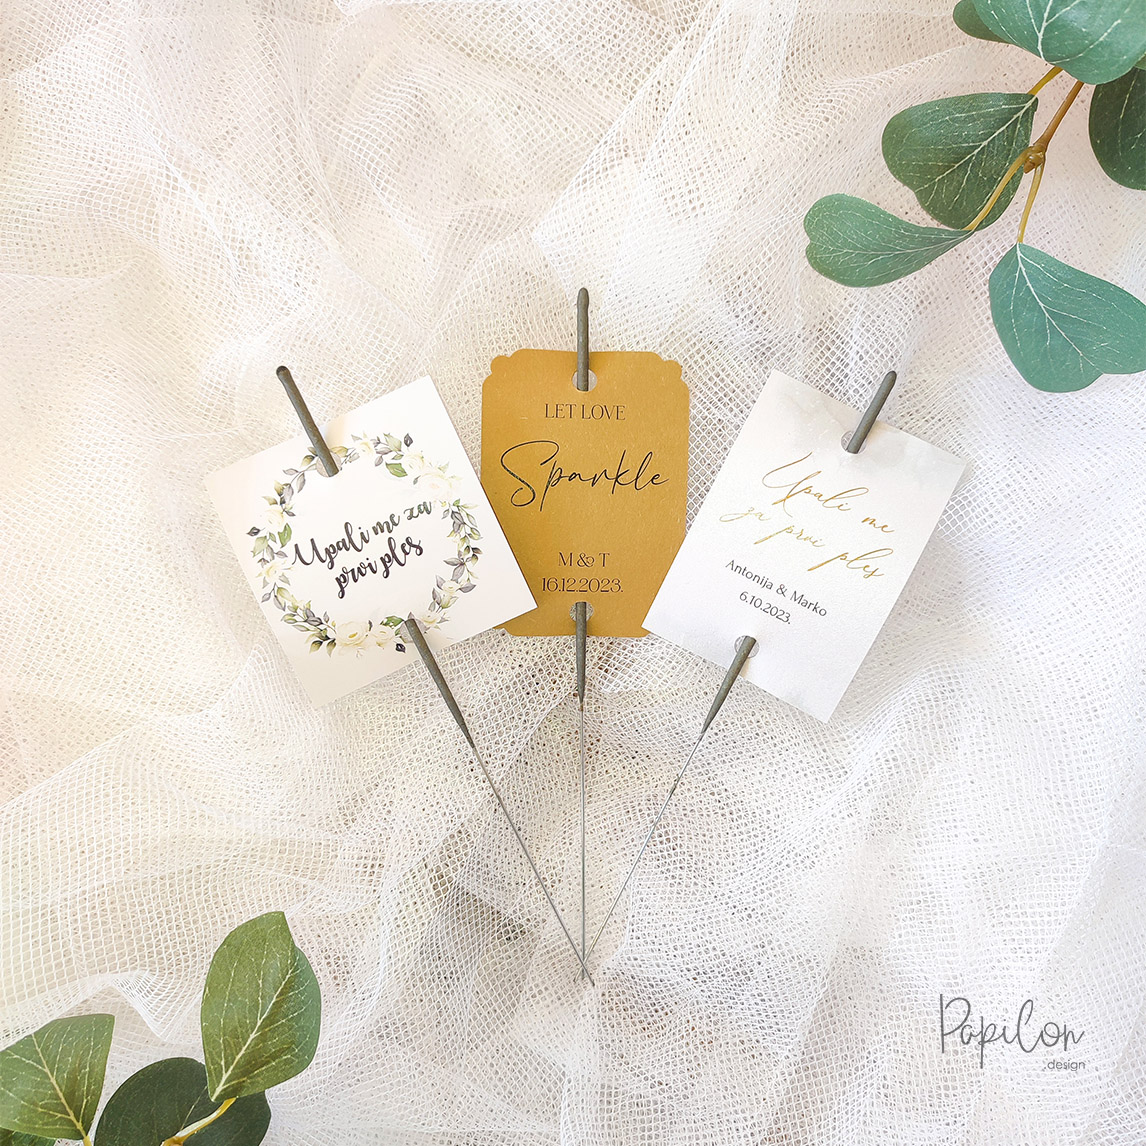 papilon design zagreb privjesnice etikete za vjenčanje zahvalnice prskalice